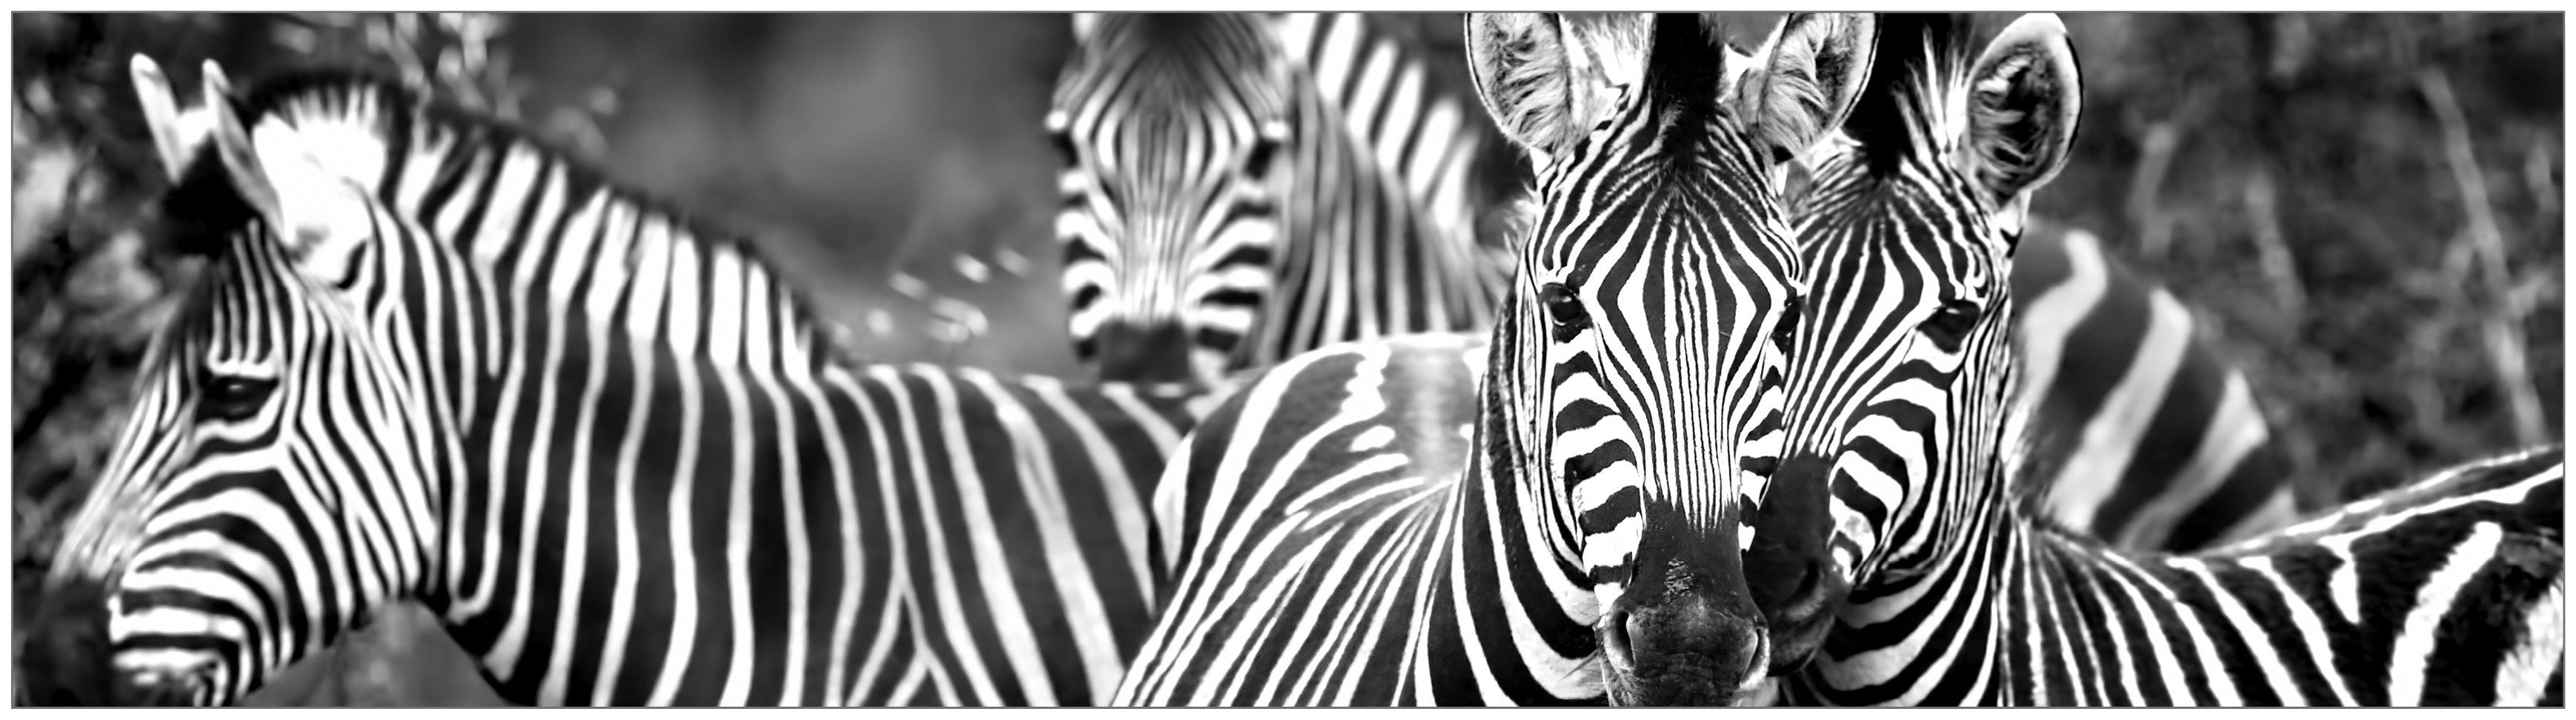 MySpotti Küchenrückwand fixy Zebra herd, selbstklebende und flexible Küchenrückwand-Folie